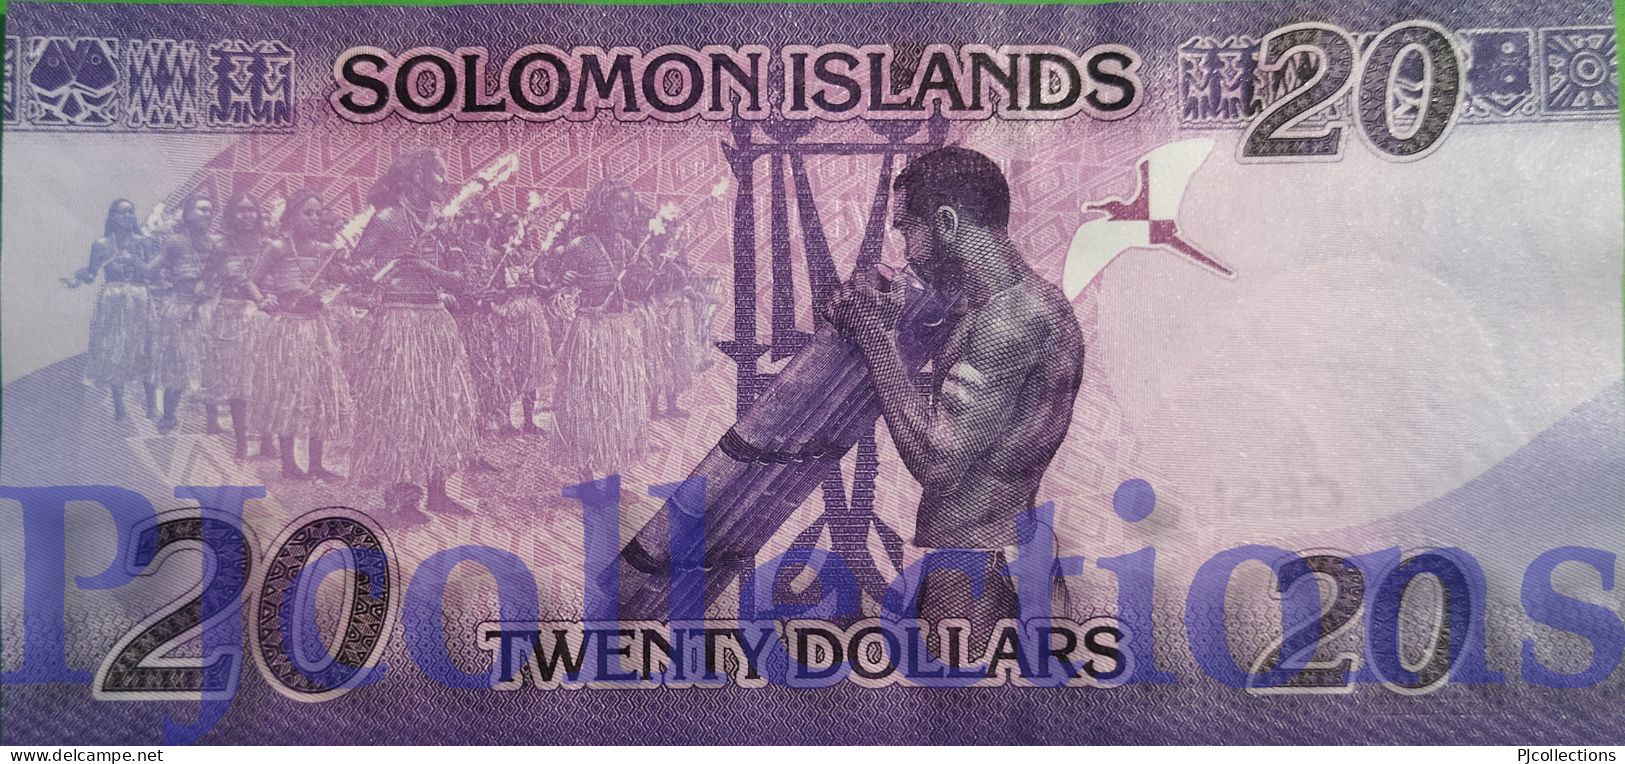 SOLOMON ISLANDS 20 DOLLARS 2017 PICK 34 UNC LOW SERIAL NUMBER "A/1 000766" - Solomon Islands